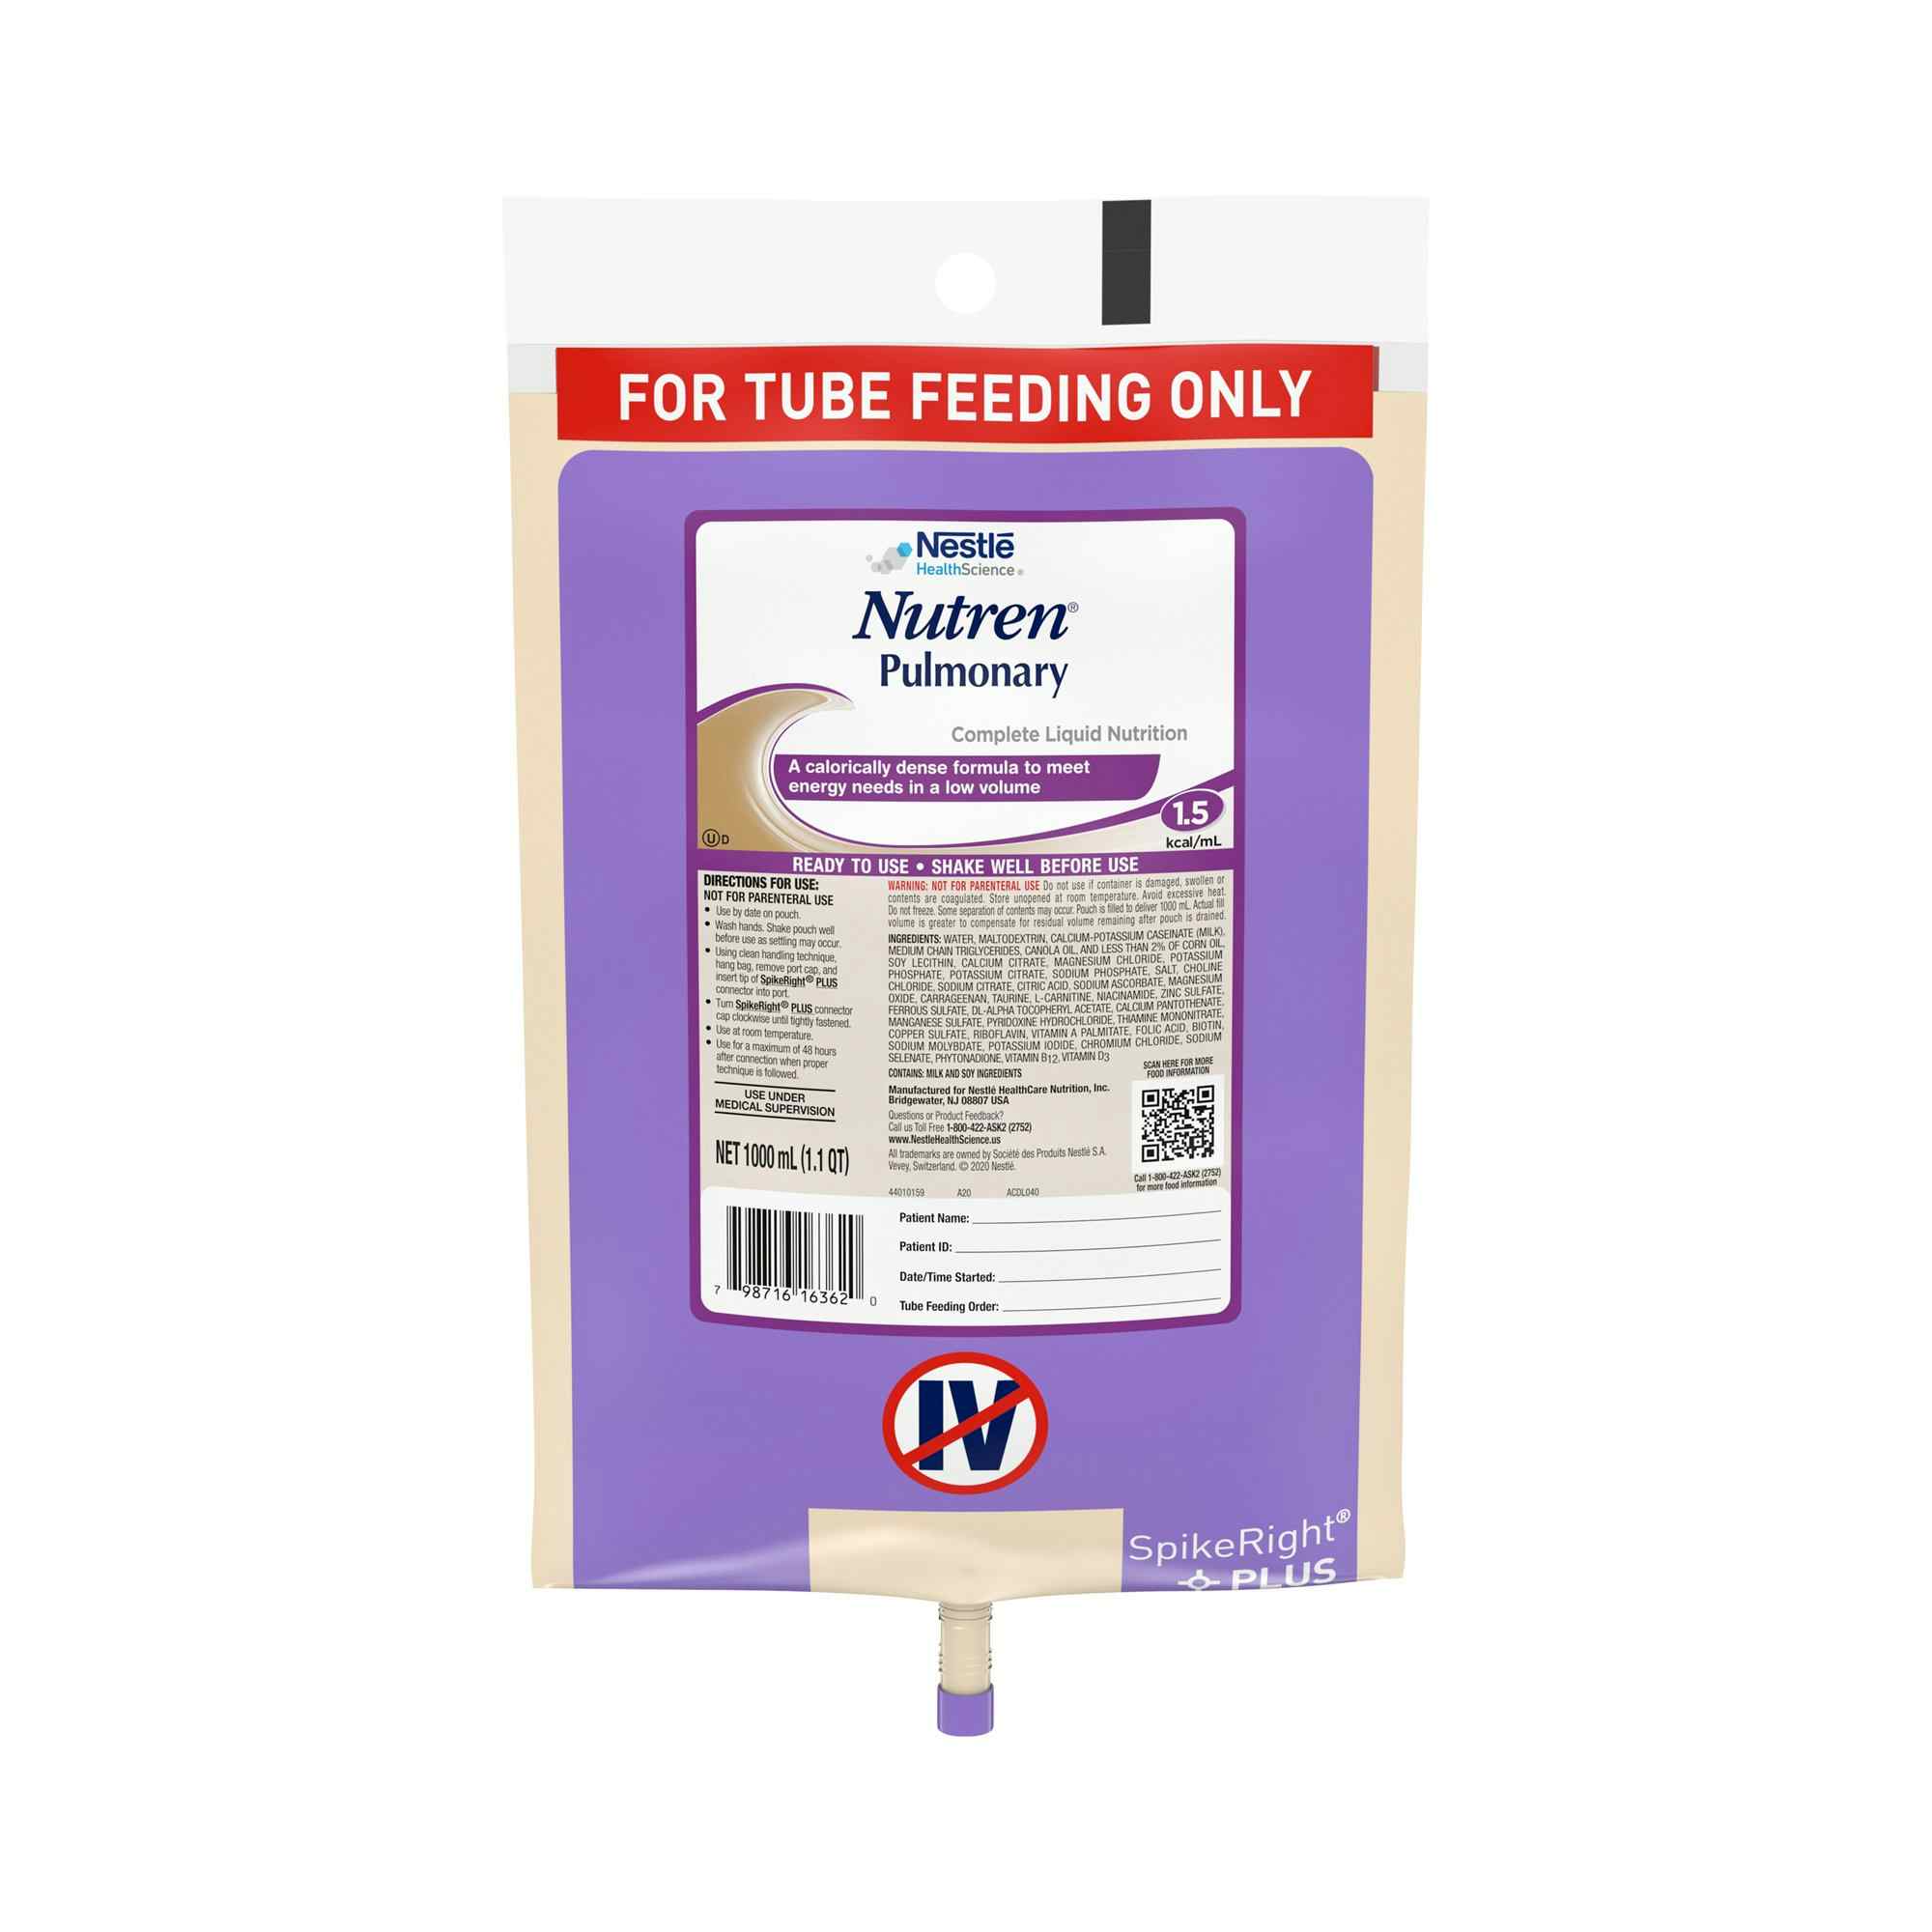 Nutren Pulmonary Complete Liquid Nutrition Tube Feeding Formula, 33.8 oz.